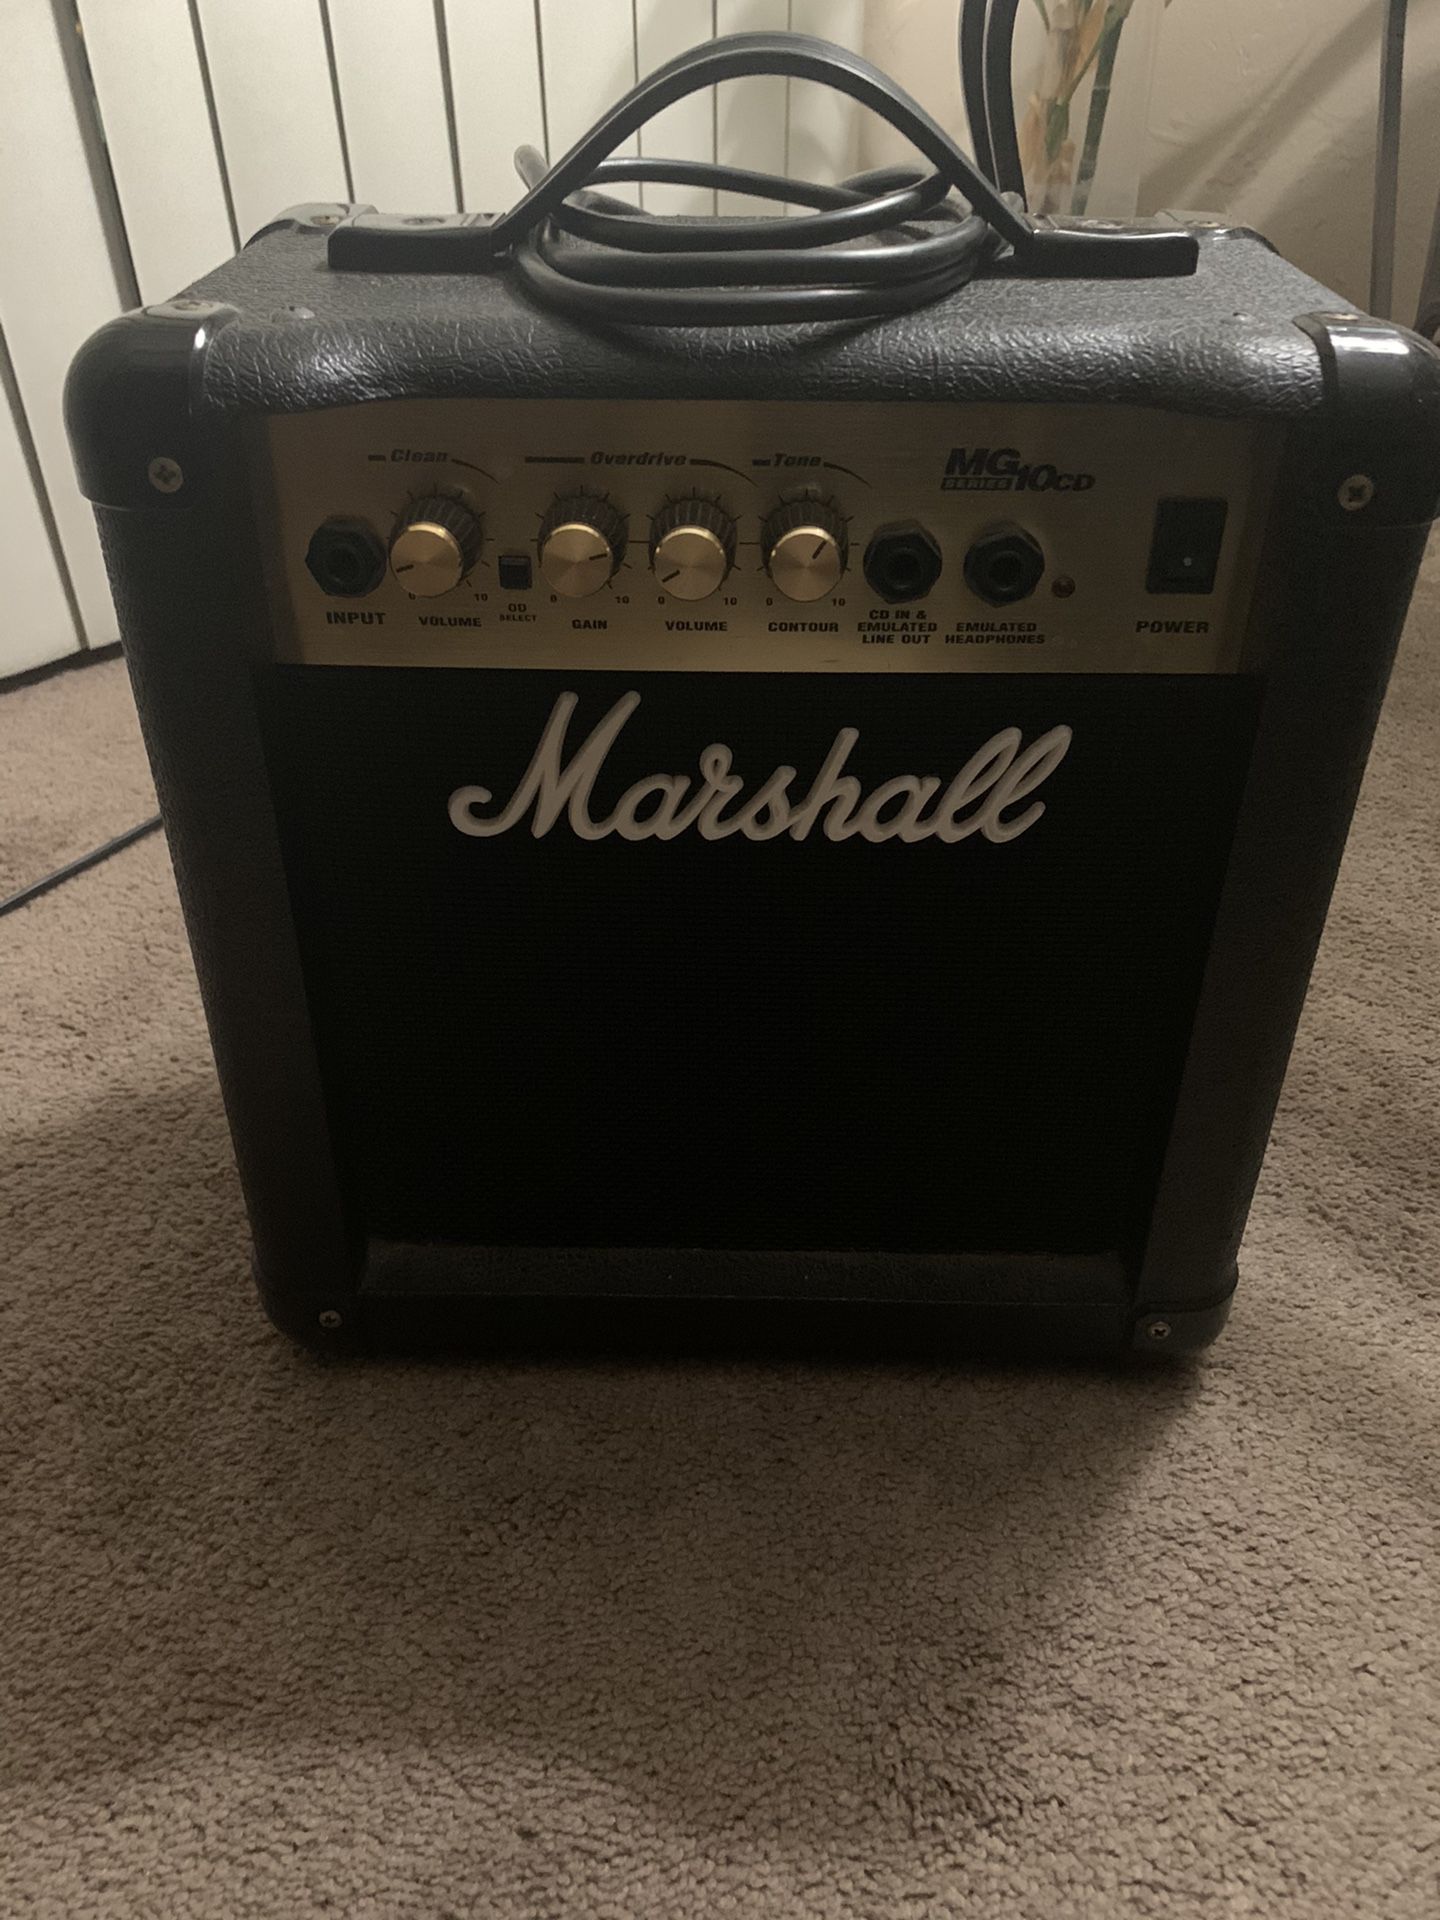 Marshall practice amp